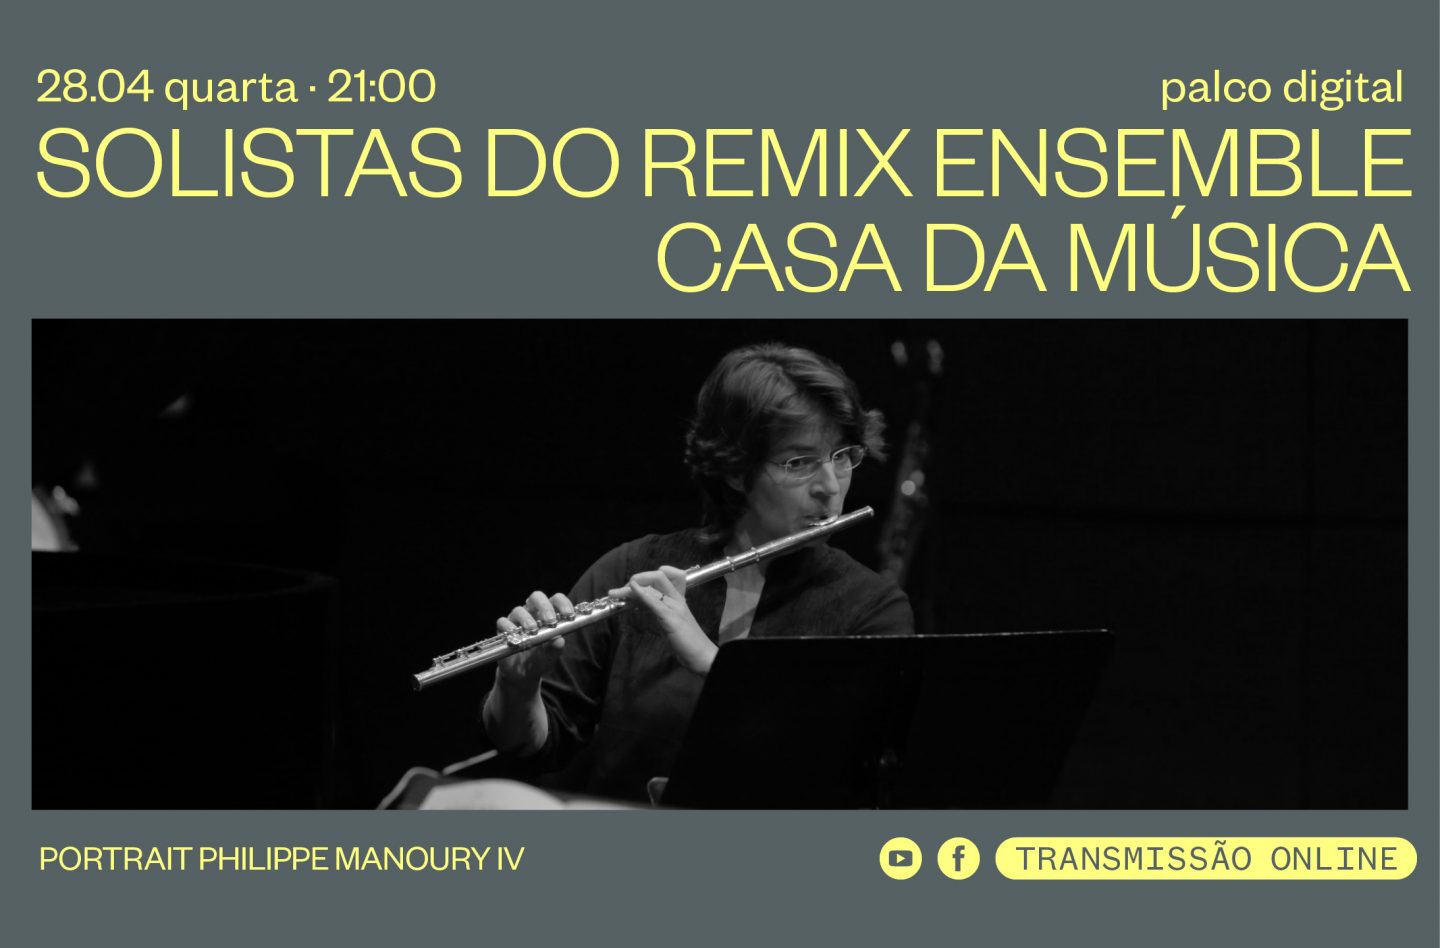 Soloists of the Remix Ensemble Casa da Música